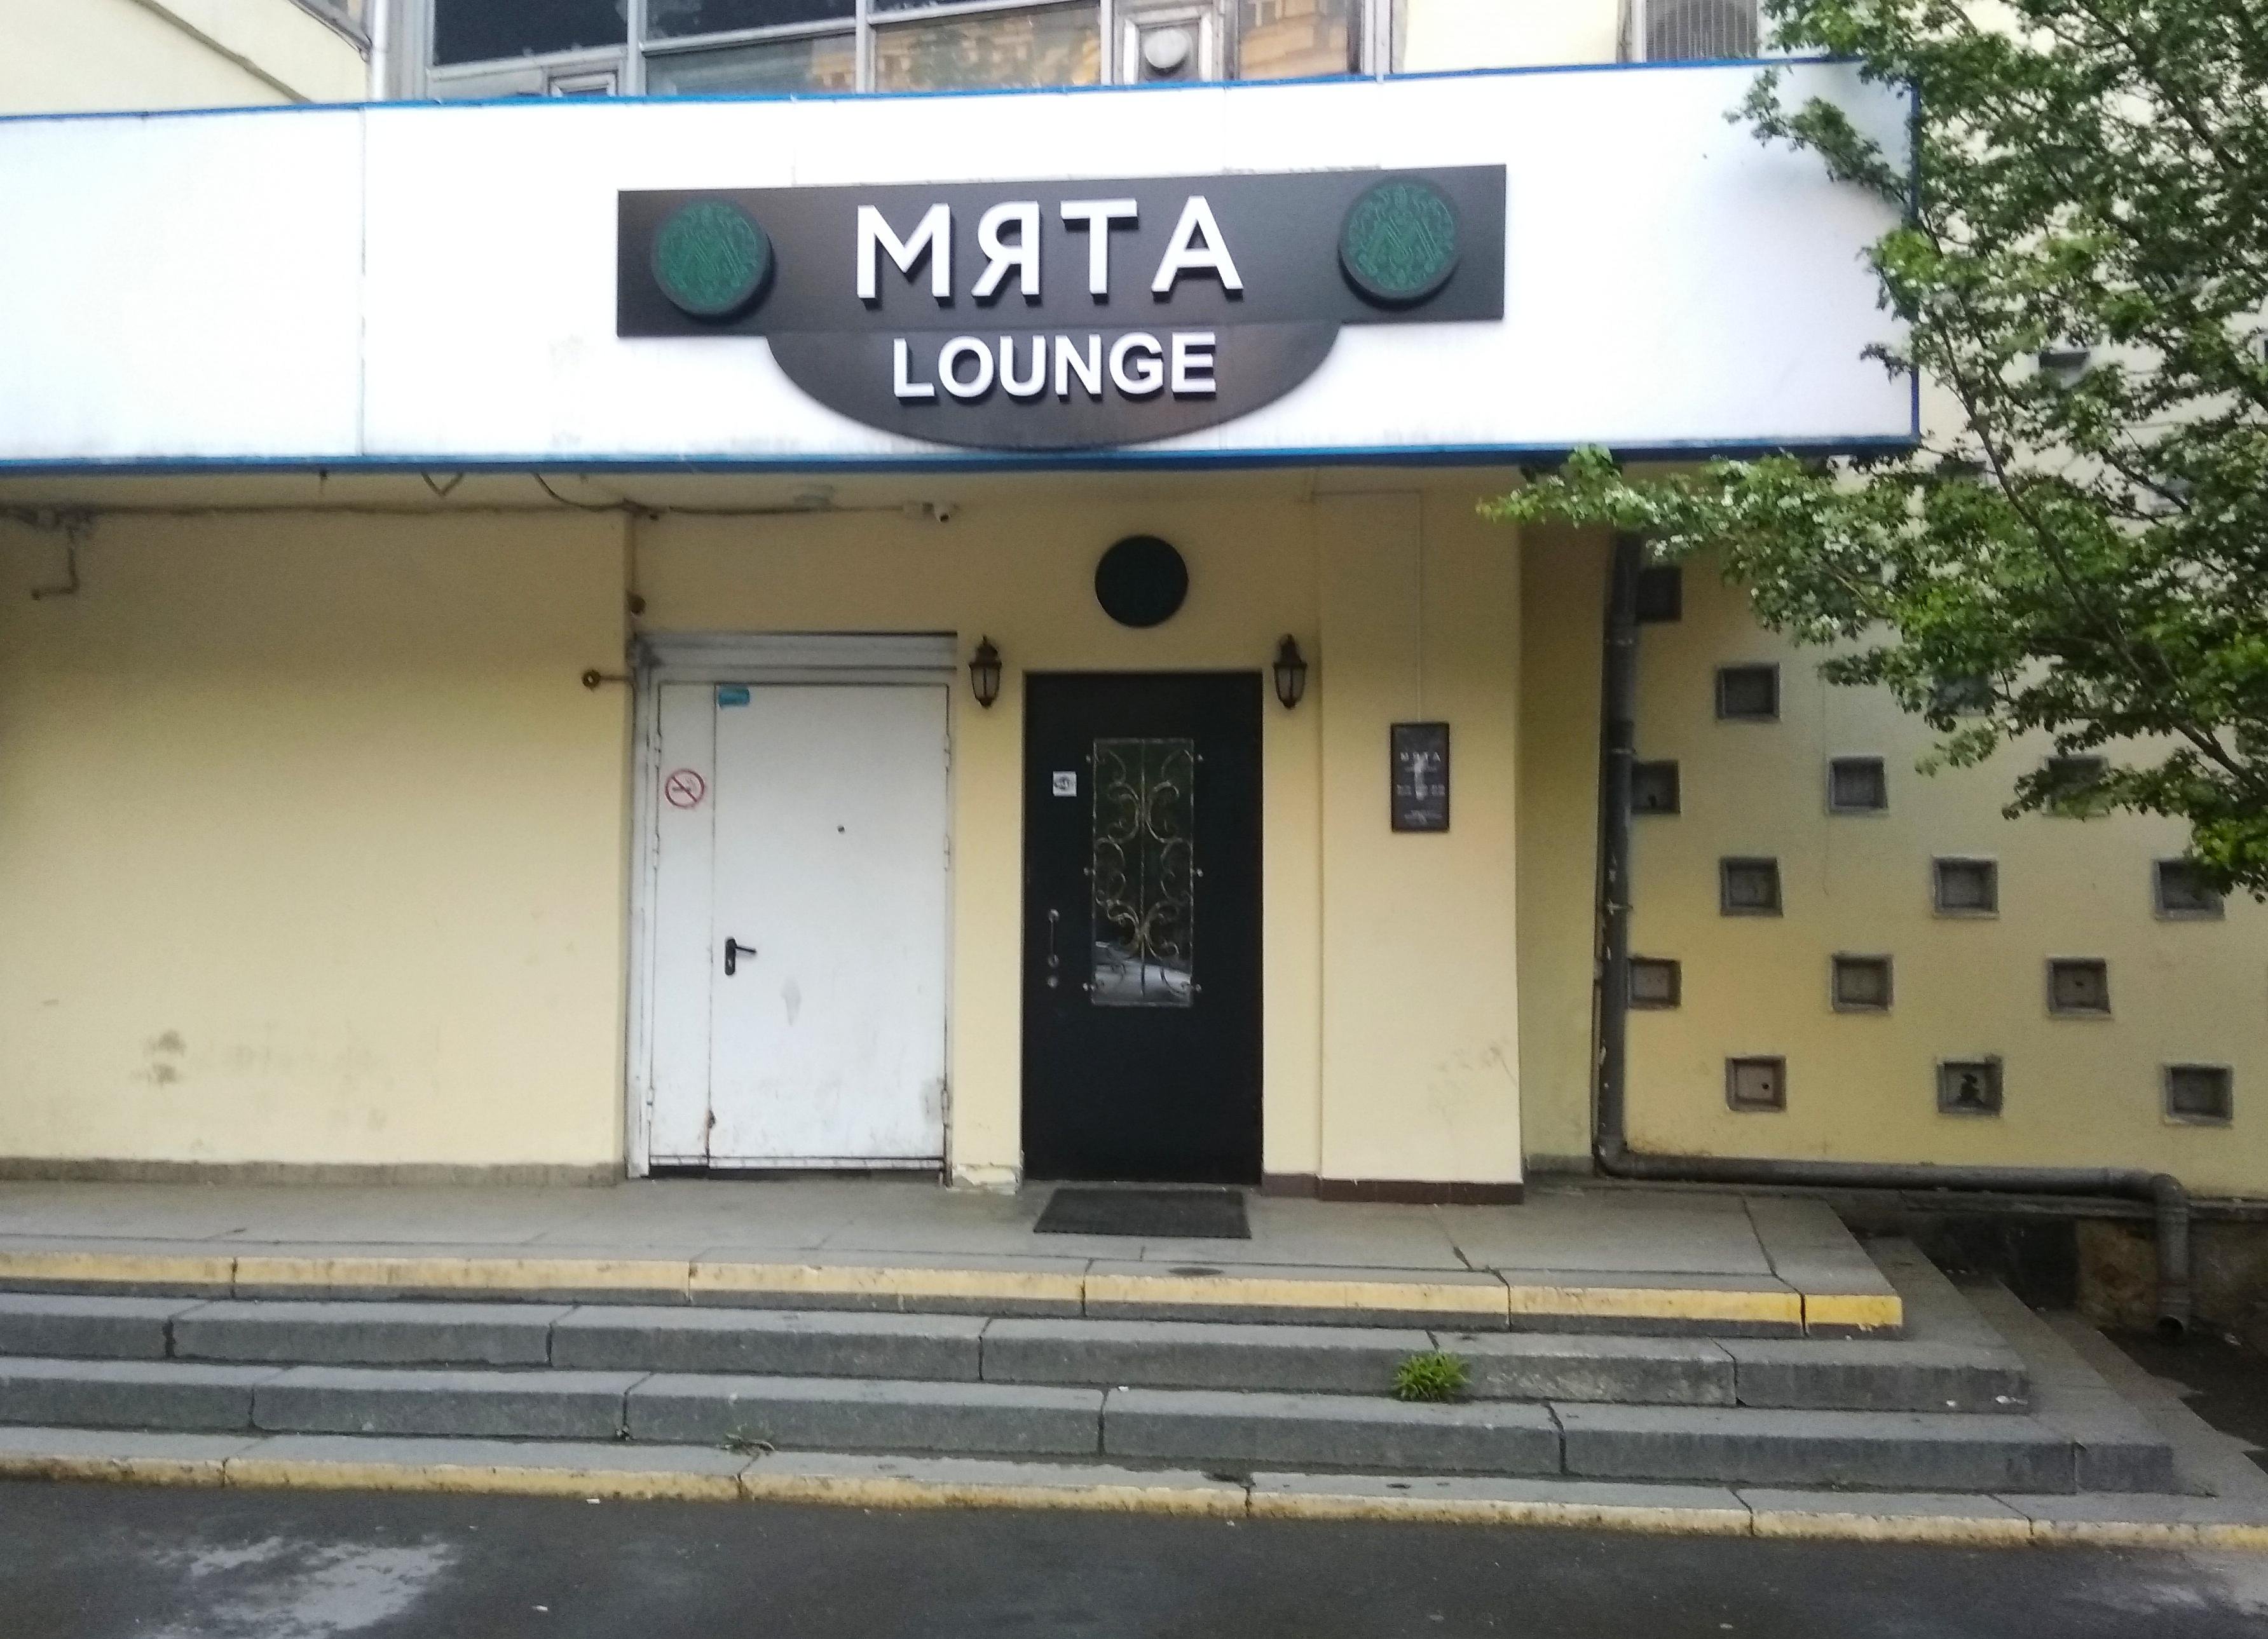 Мята Lounge Семеновская, центр паровых коктейлей, улица Щербаковская, 53 к2, 2 этаж